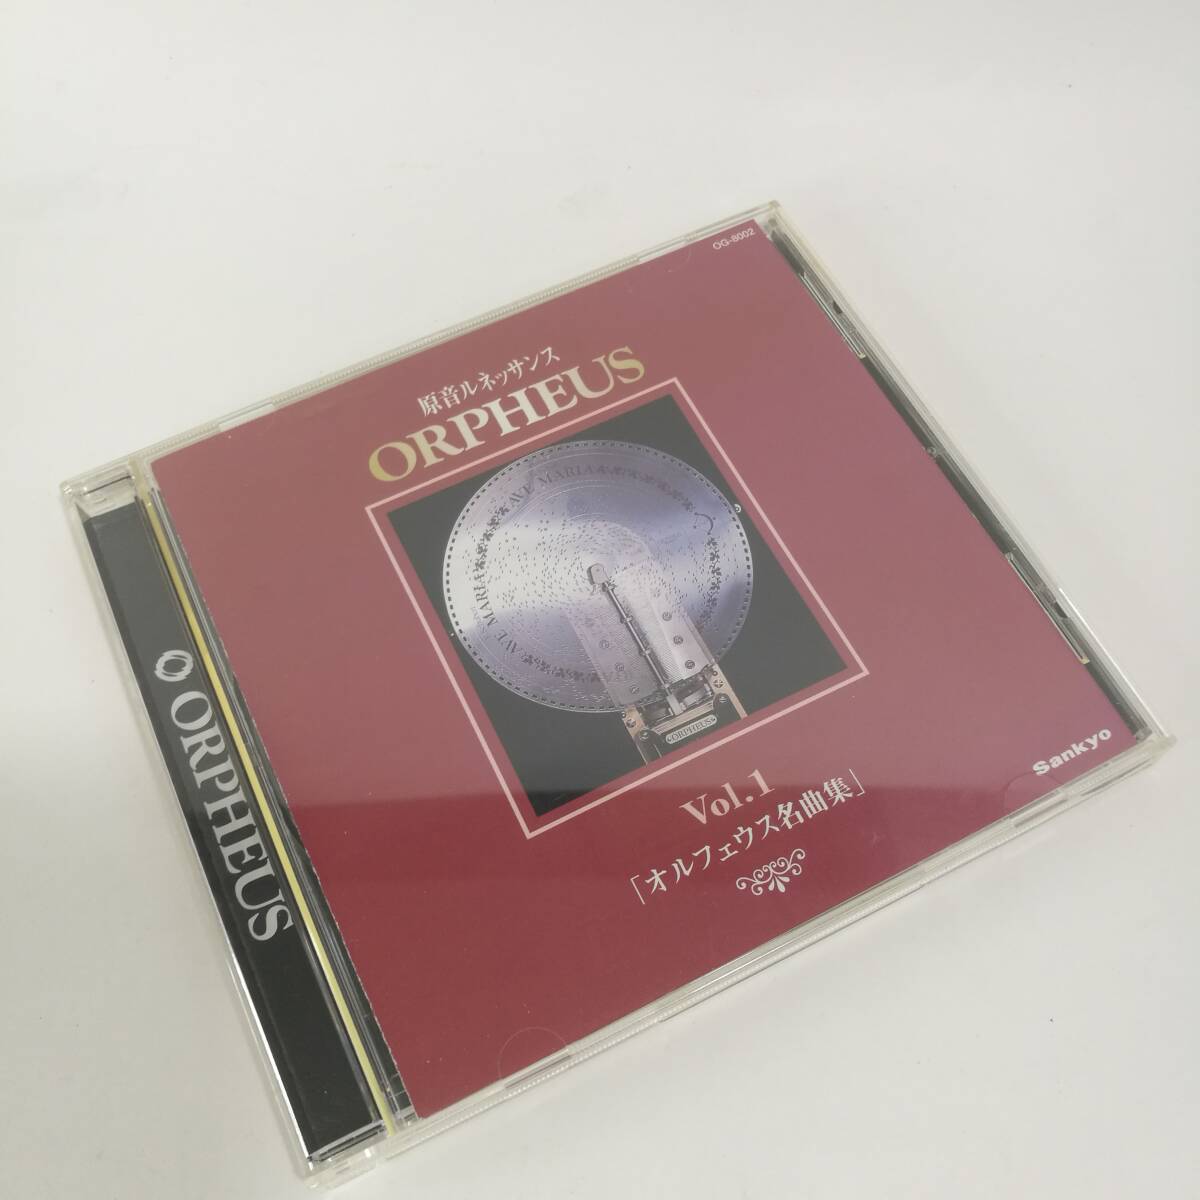 [C8002]CD 80弁ディスクオルゴール オルフェウス名曲集 Vol.1 /美しく青きドナウ/赤とんぼ/卒業写真/OG-8002の画像8